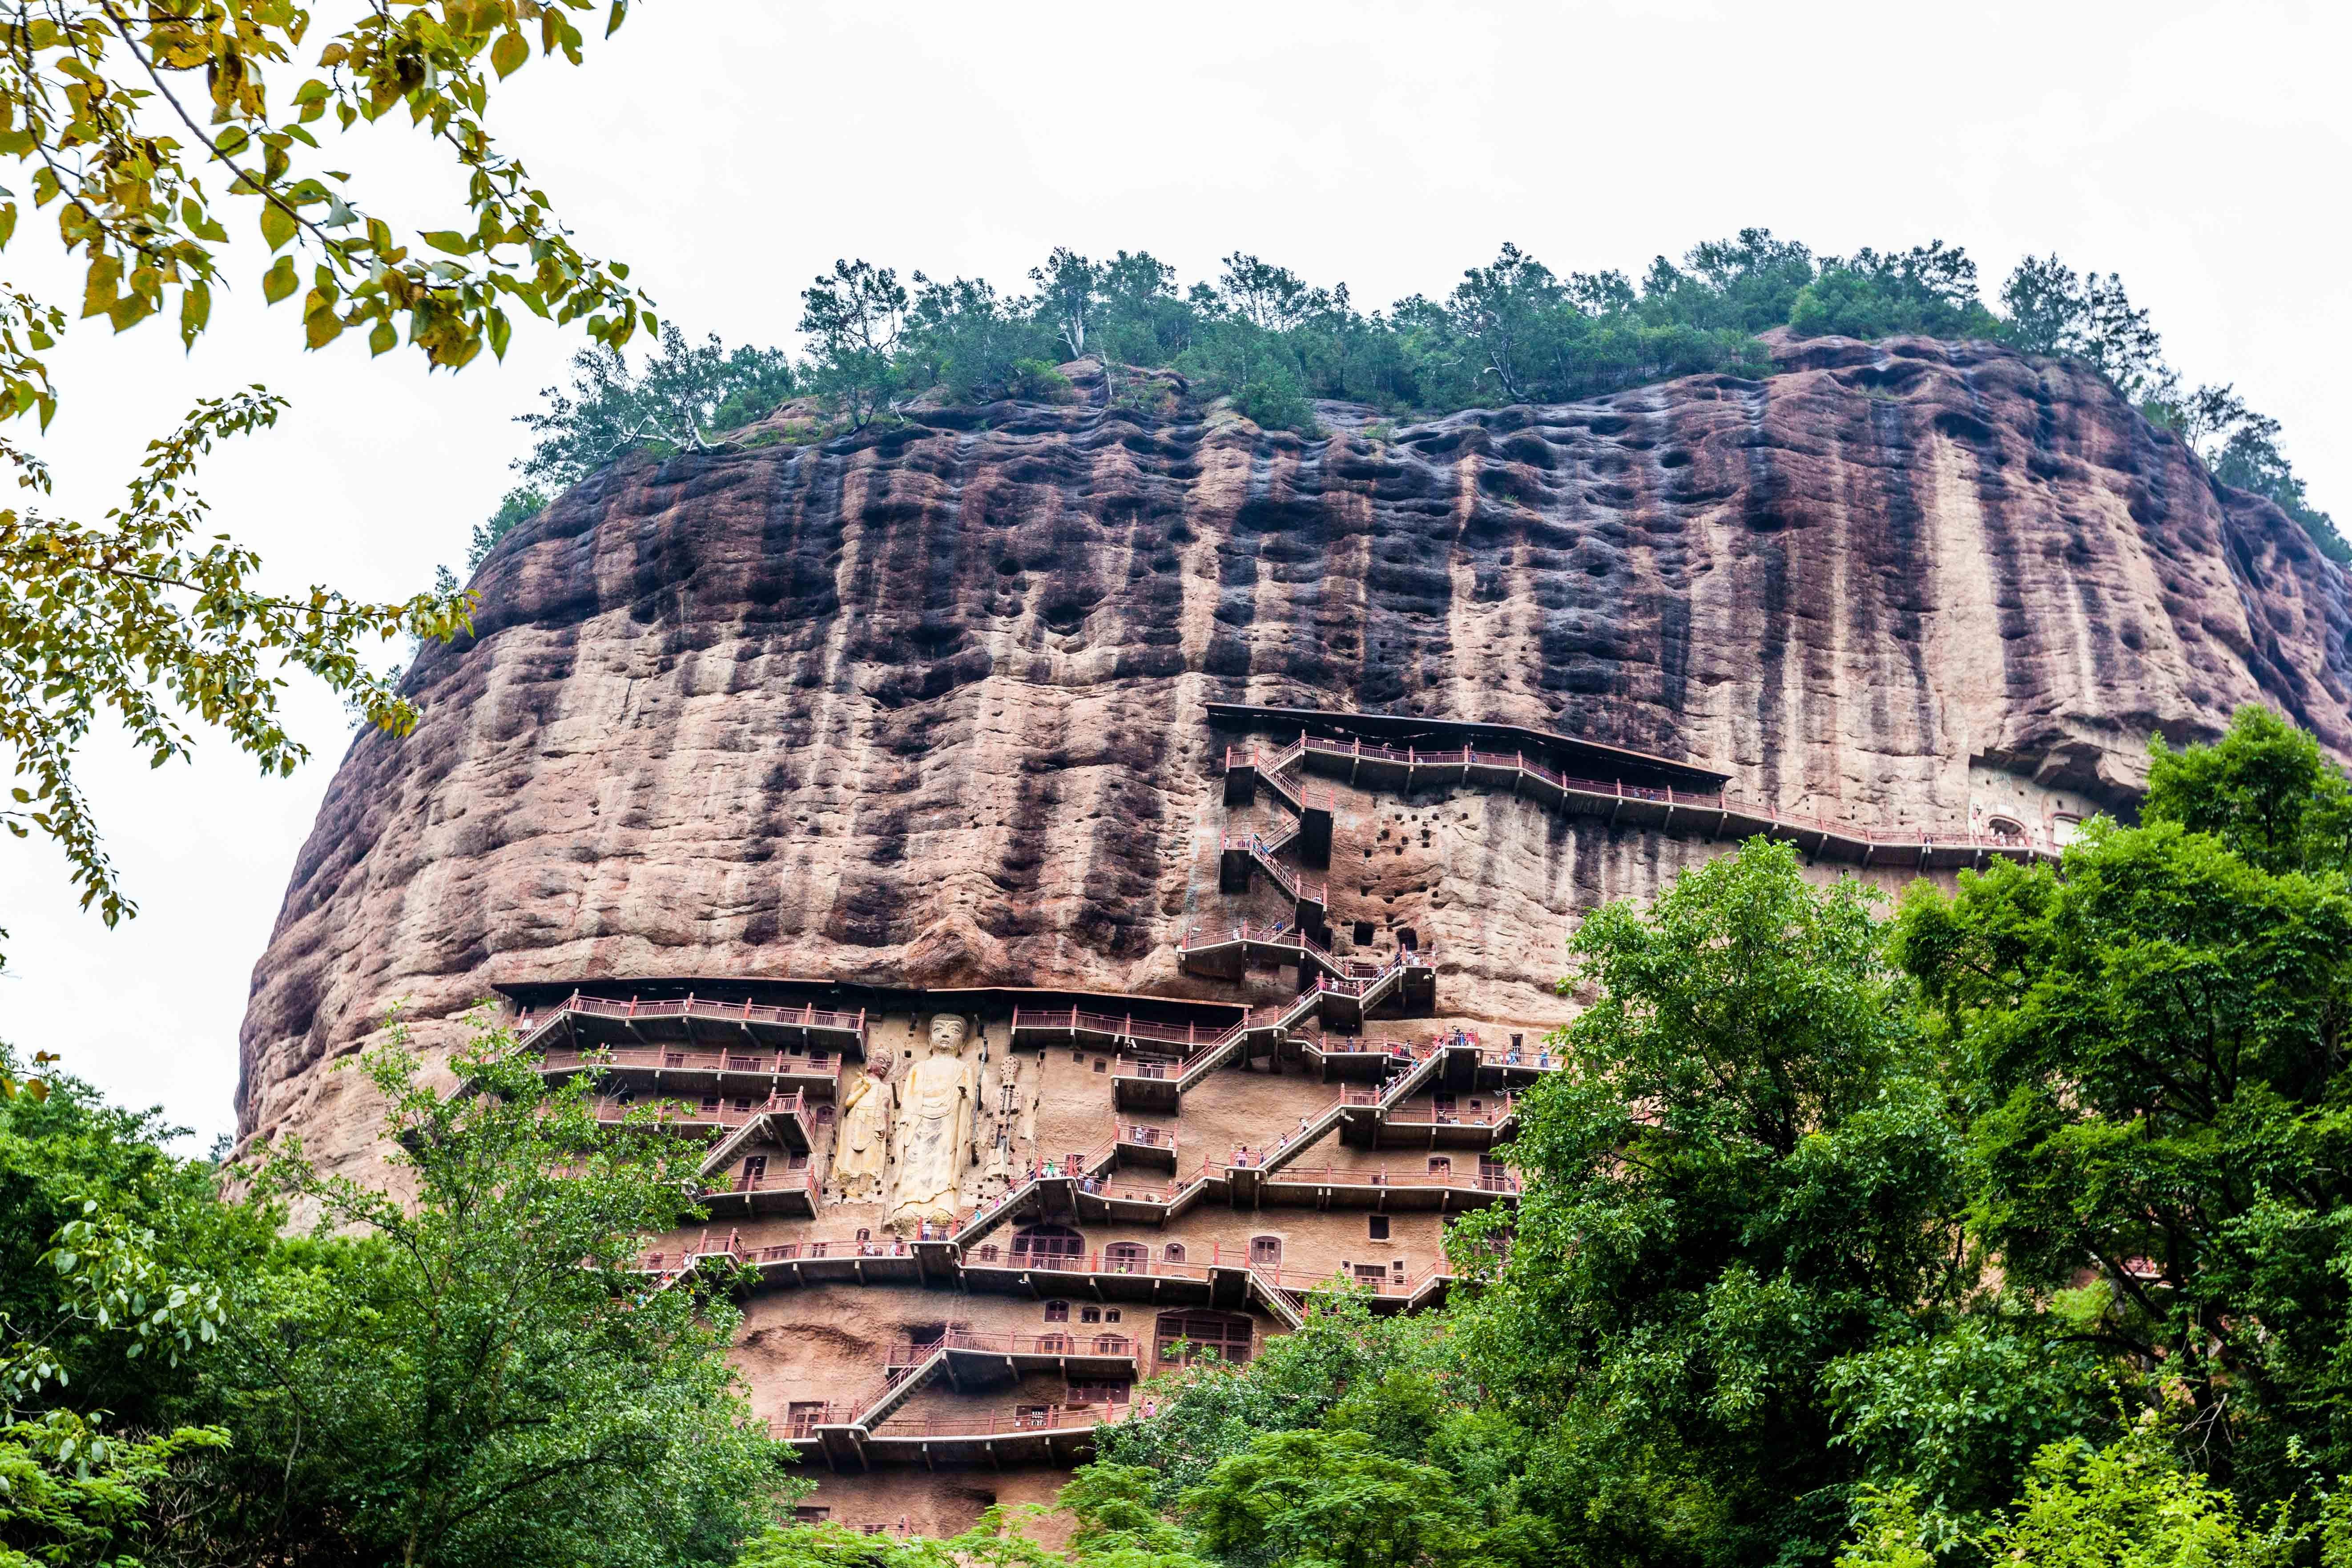 The Maijishan Grottoes